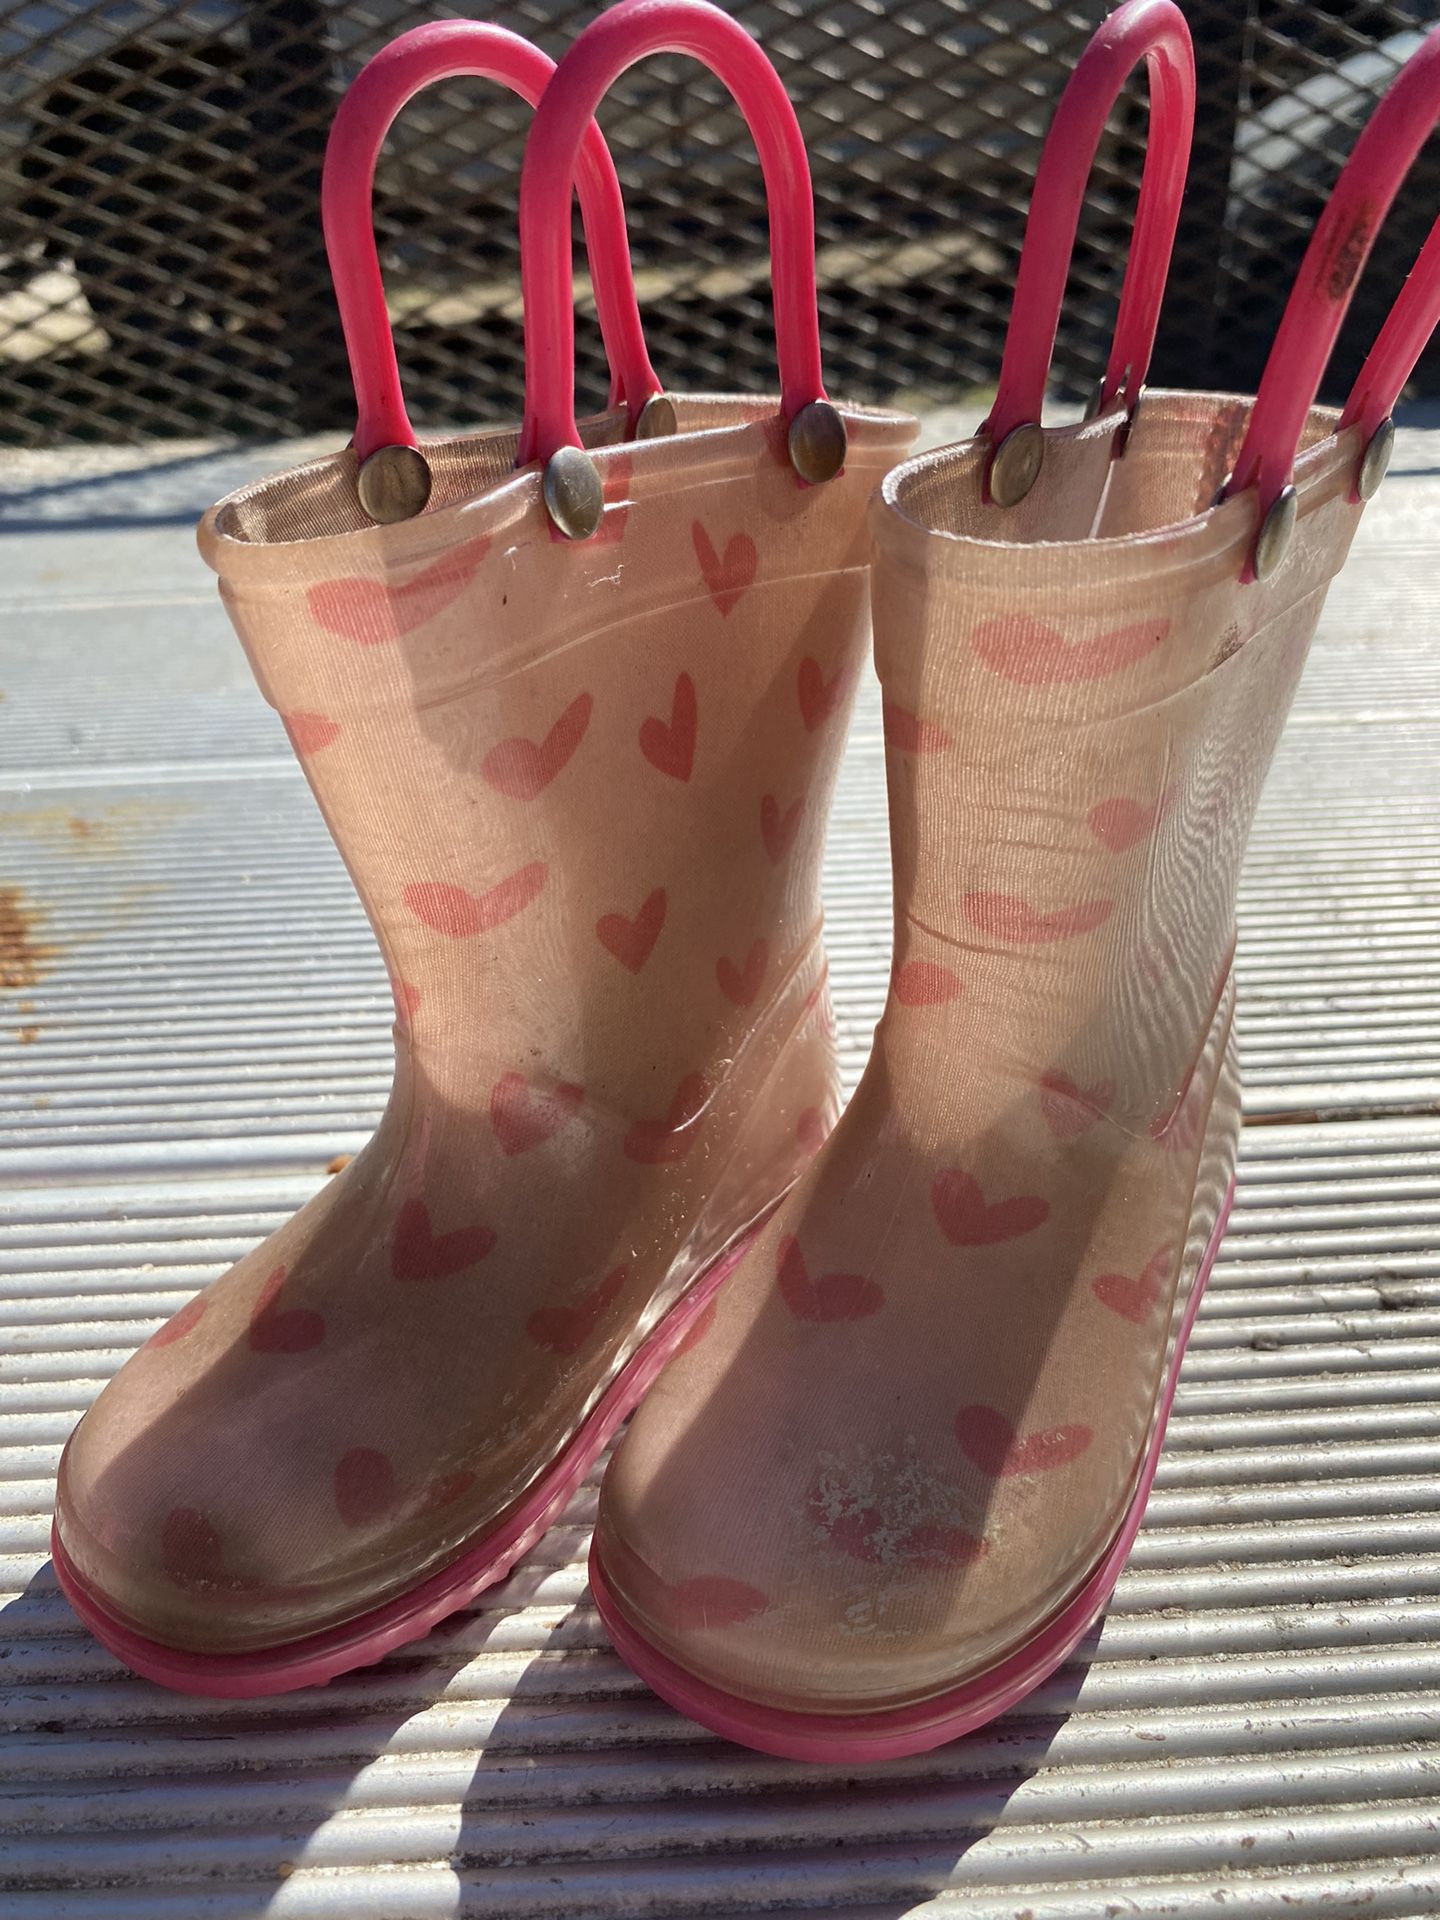 Toddler Girl Rain Boots